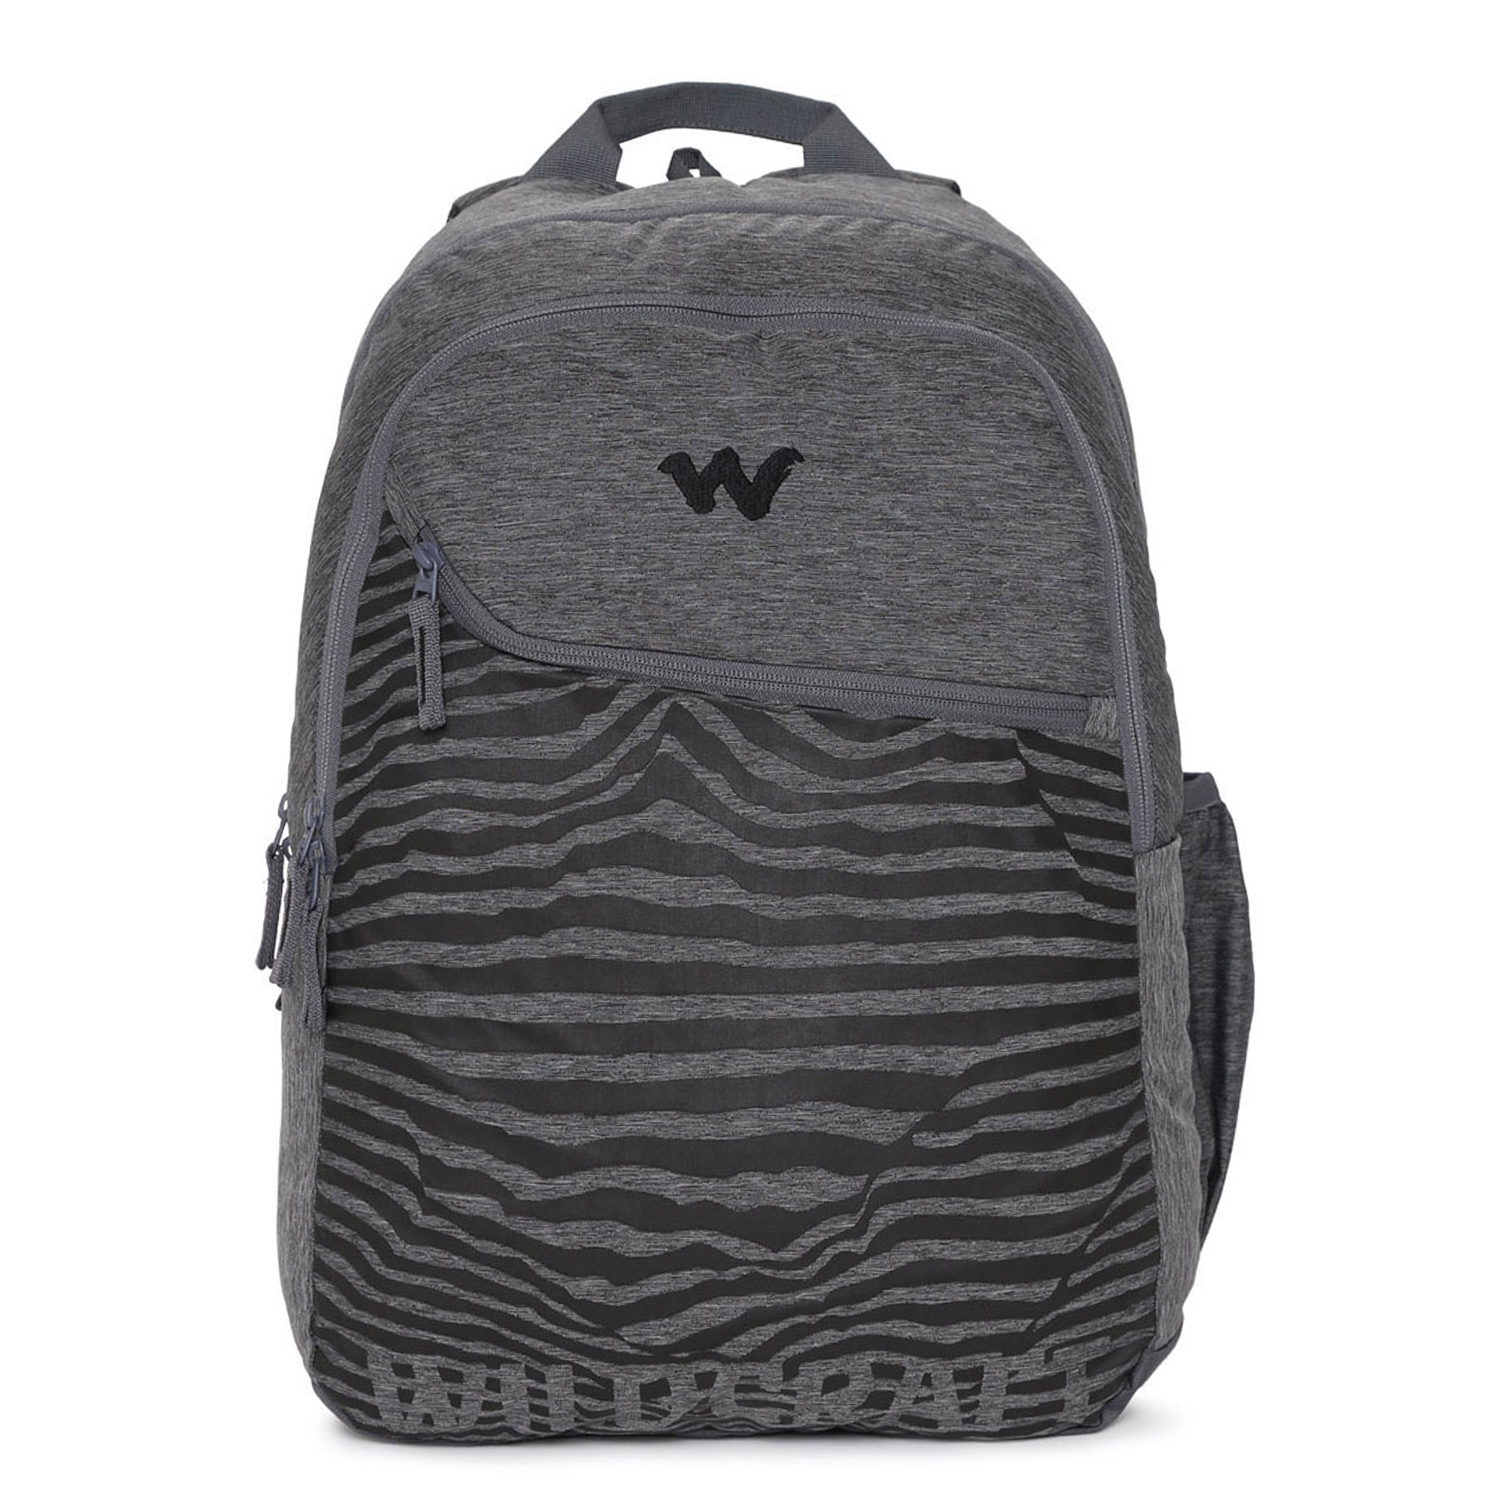 GFB Hypera Wildcraft School Bags, For College